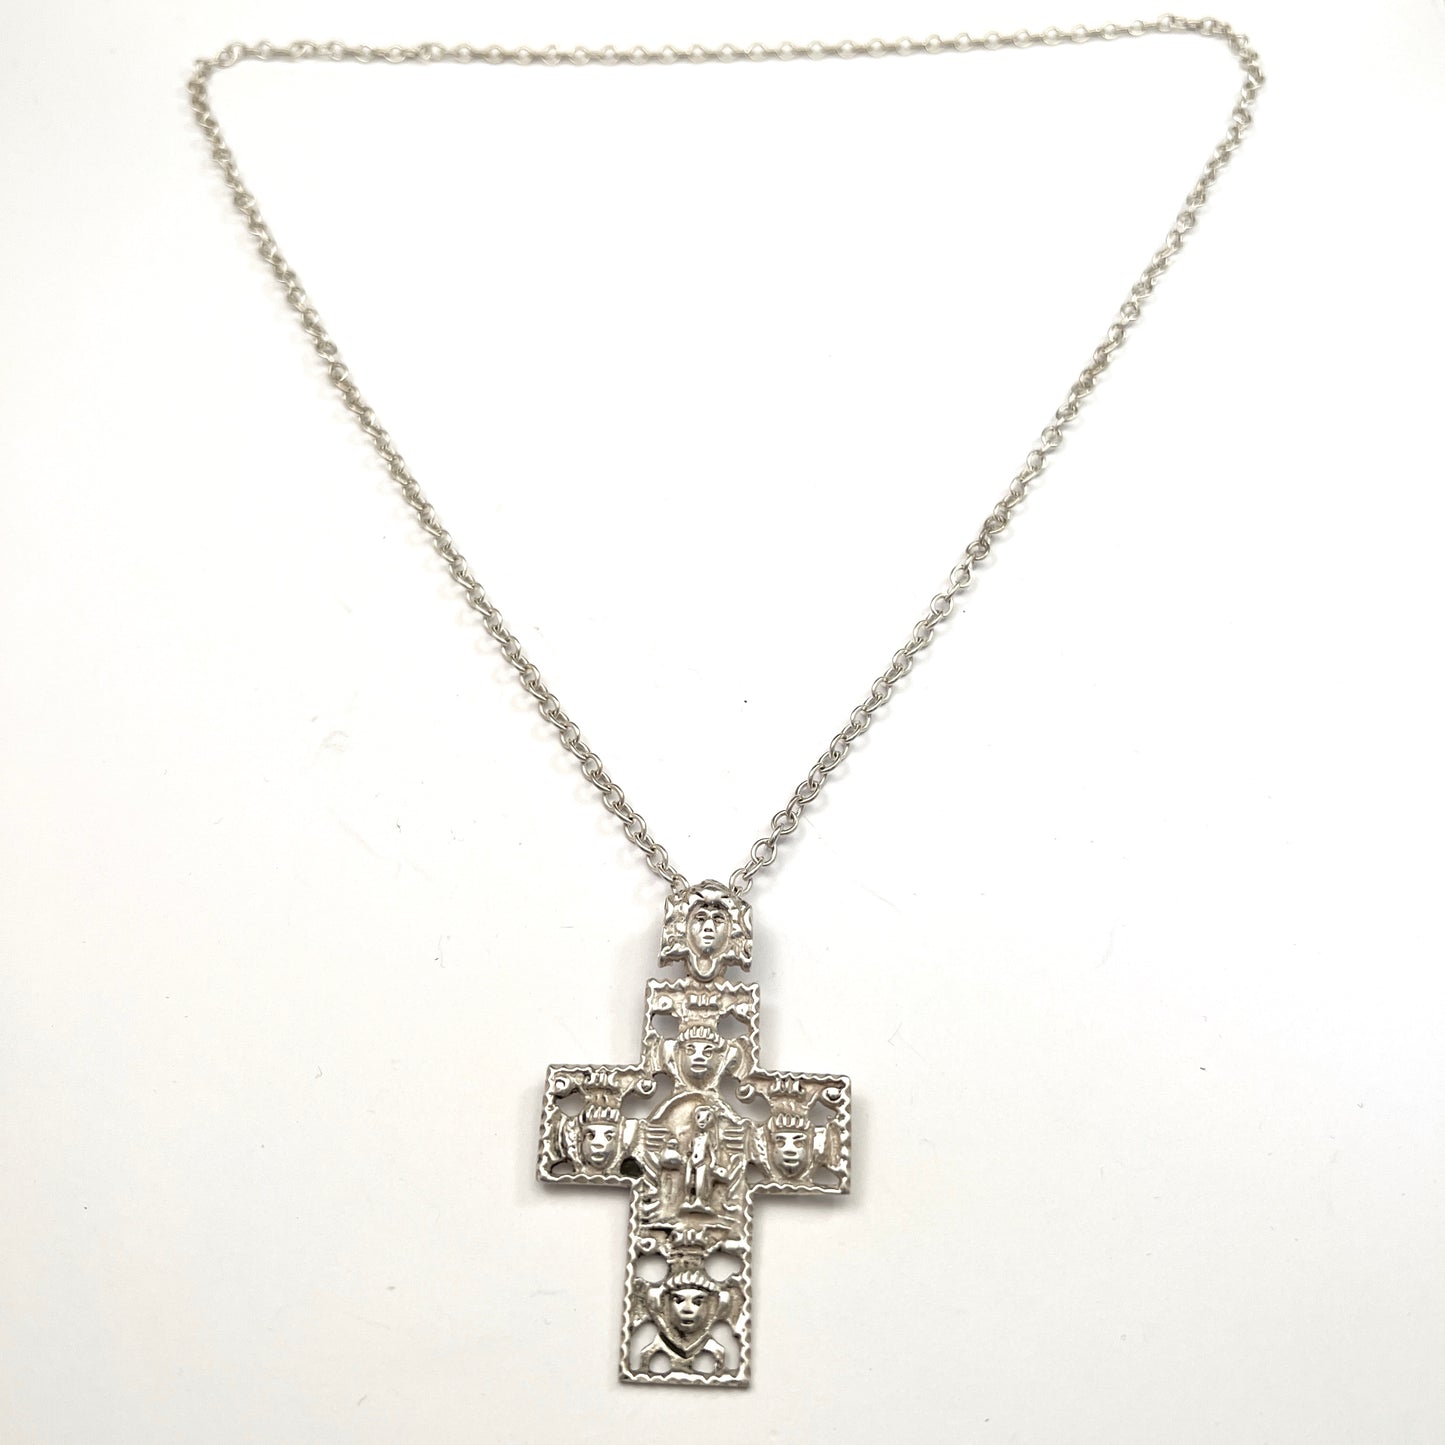 Vintage c 1950s, Solid 830 Silver Novelty Cross Pendant Necklace.